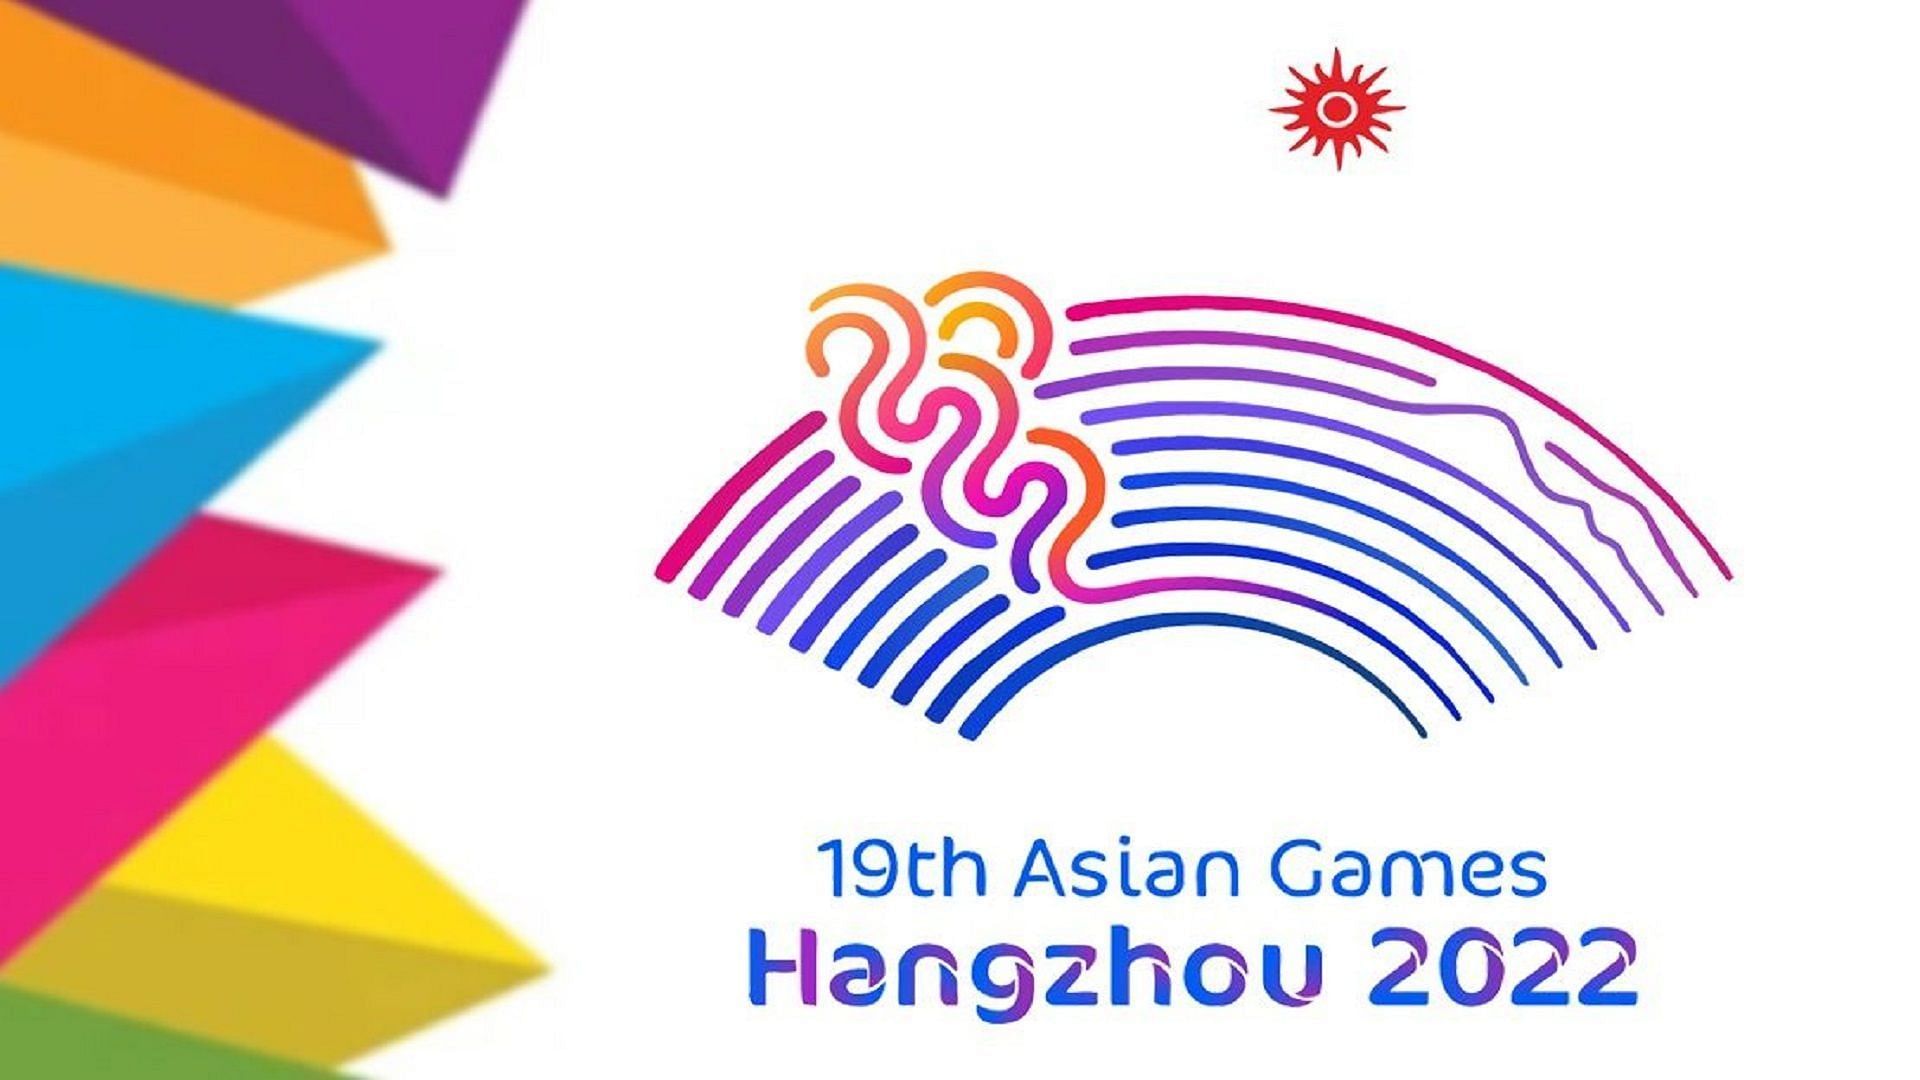 The esports program includes seven events (Image via Asian Games)